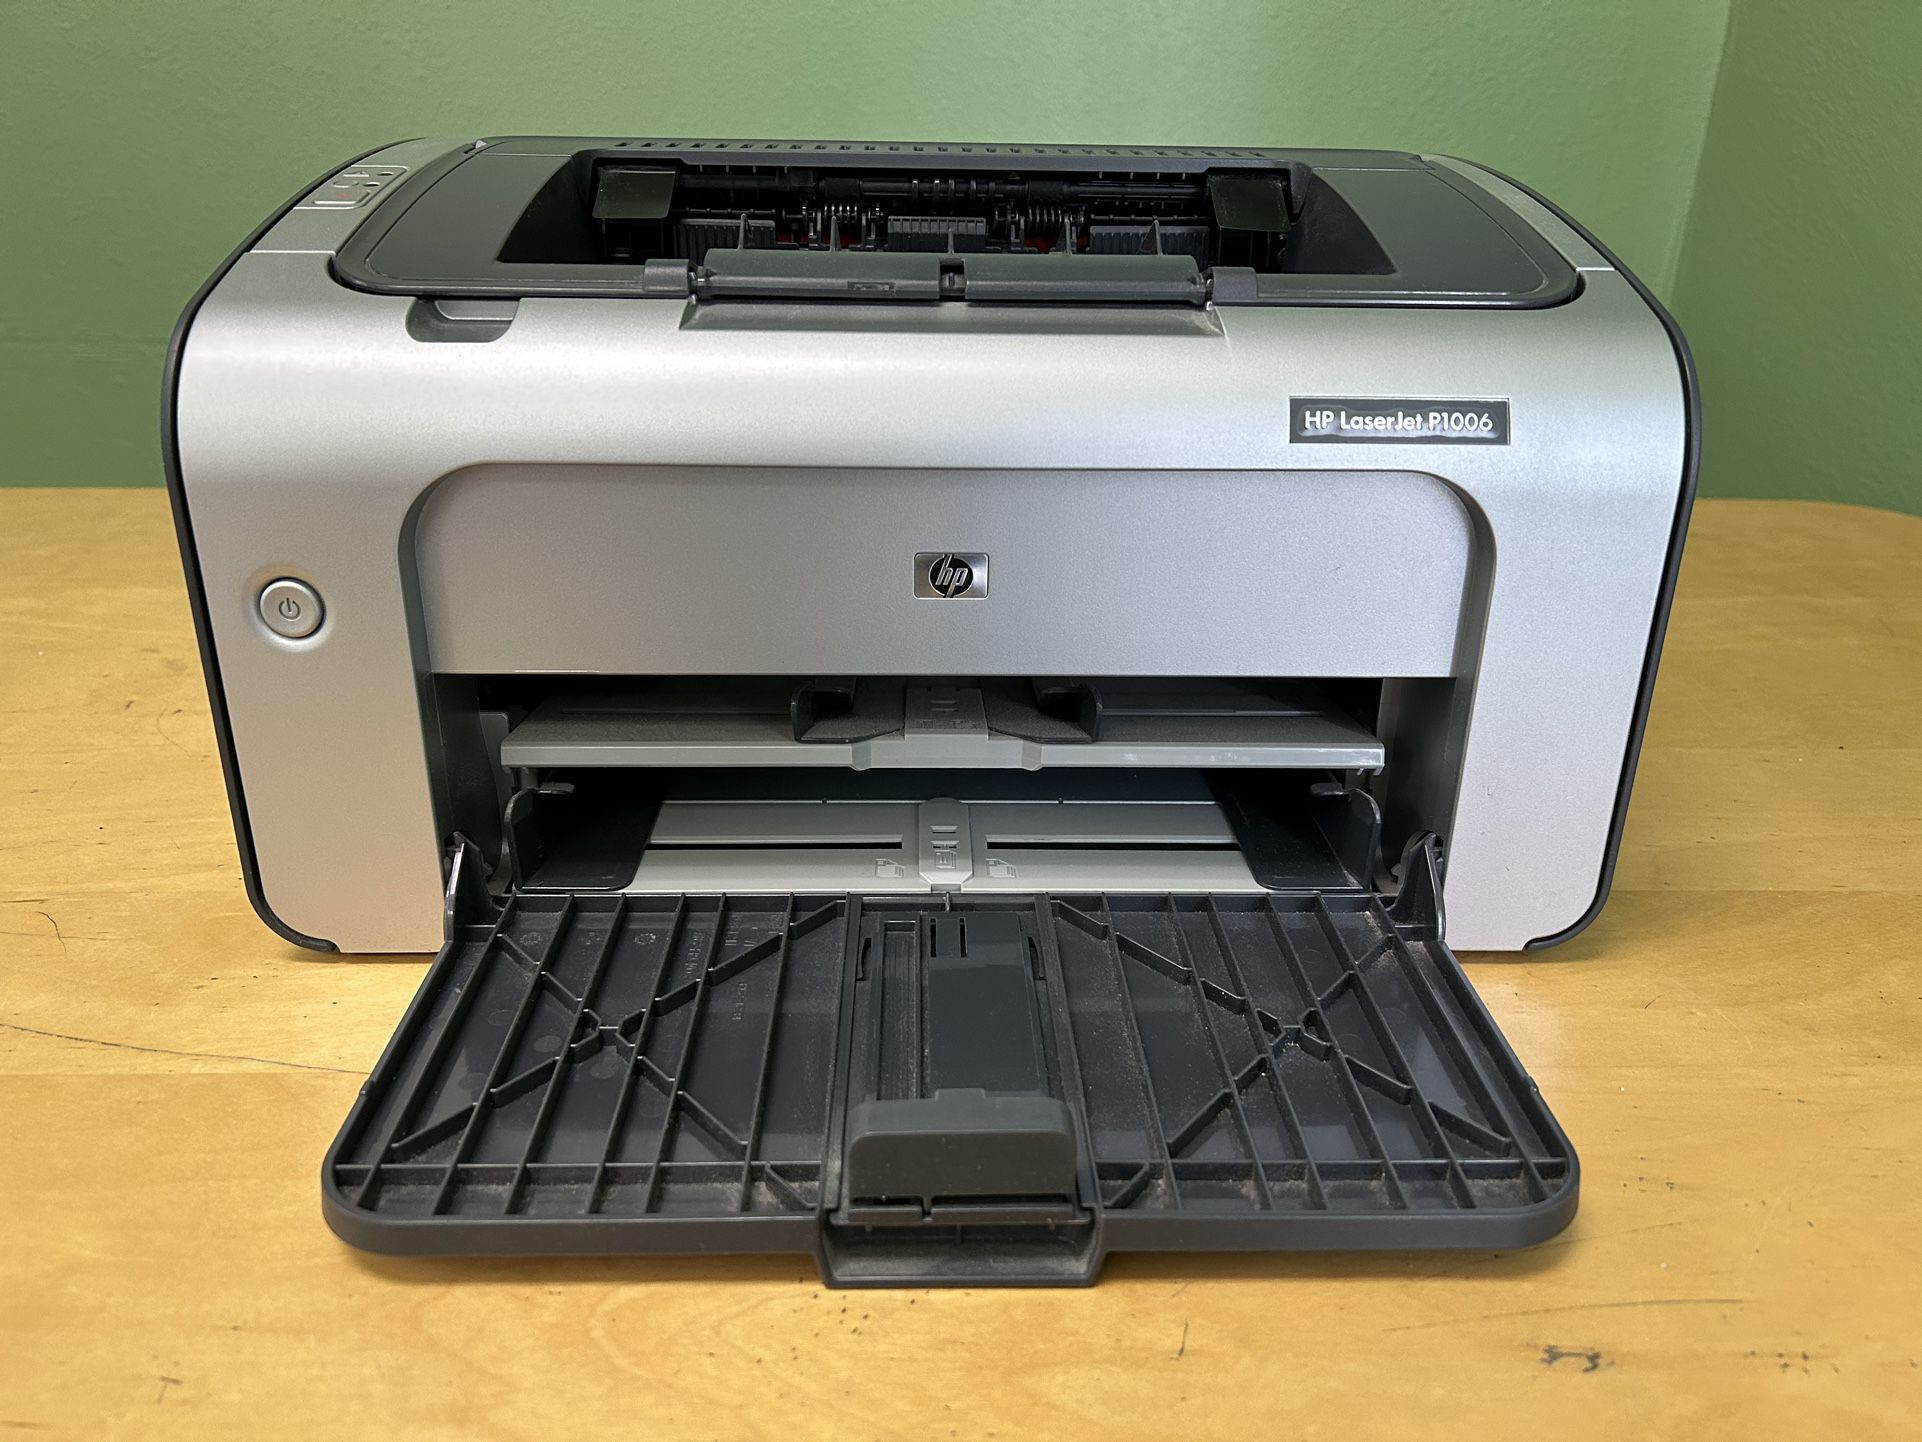 HP Laser Jet P1006 Printer Black And White Printer